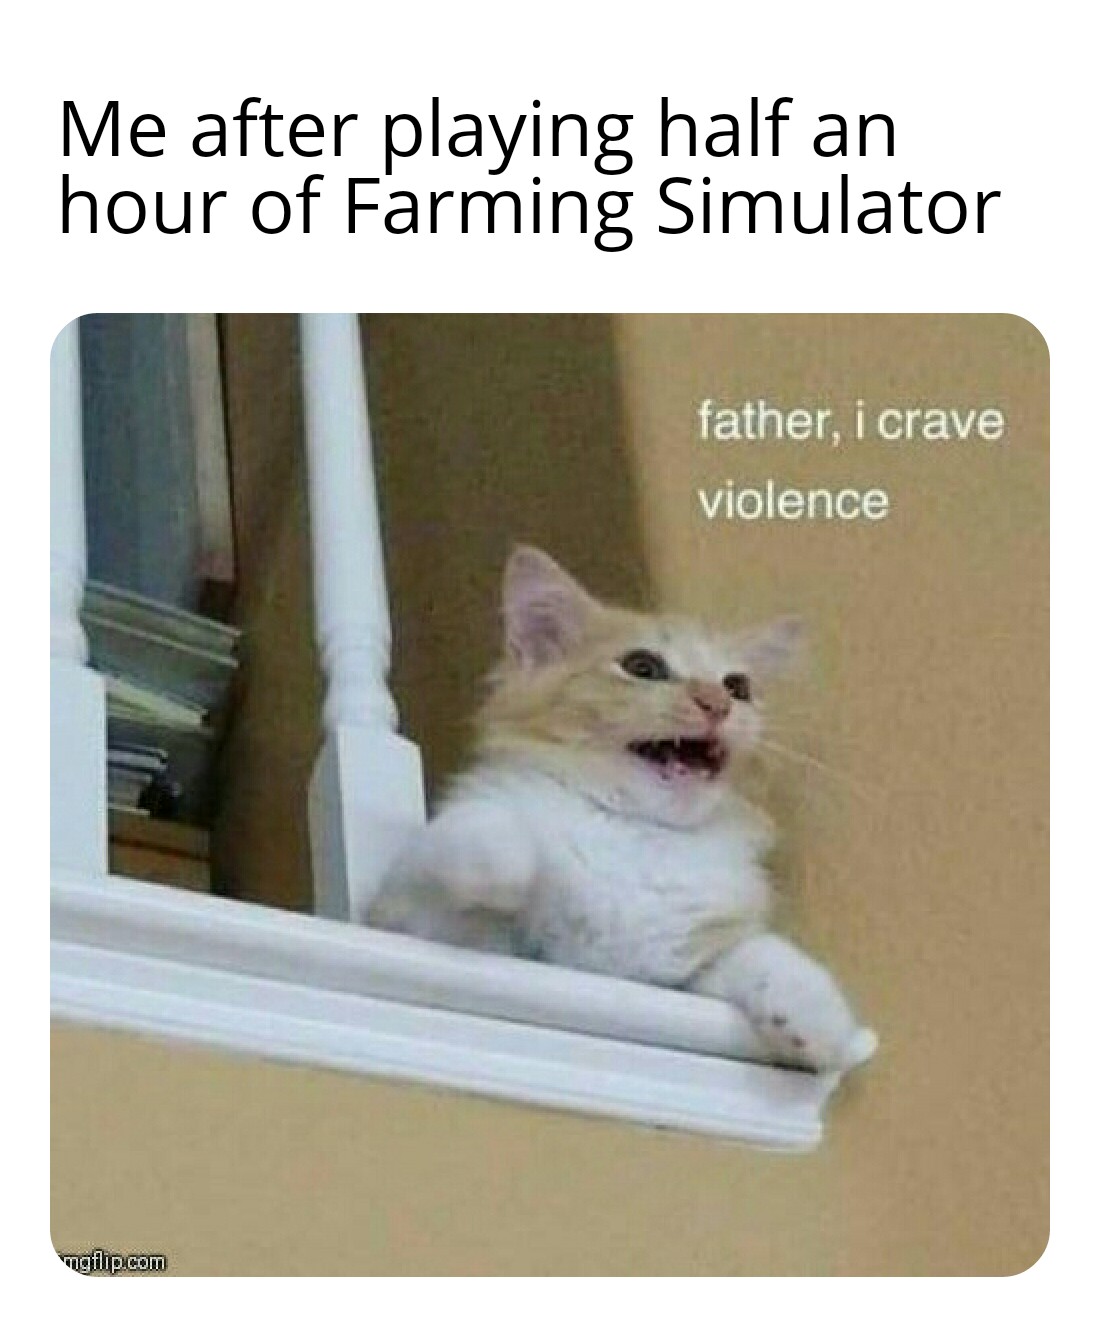 video game violence - Internet meme - Me after playing half an hour of Farming Simulator father, i crave violence mgflip.com